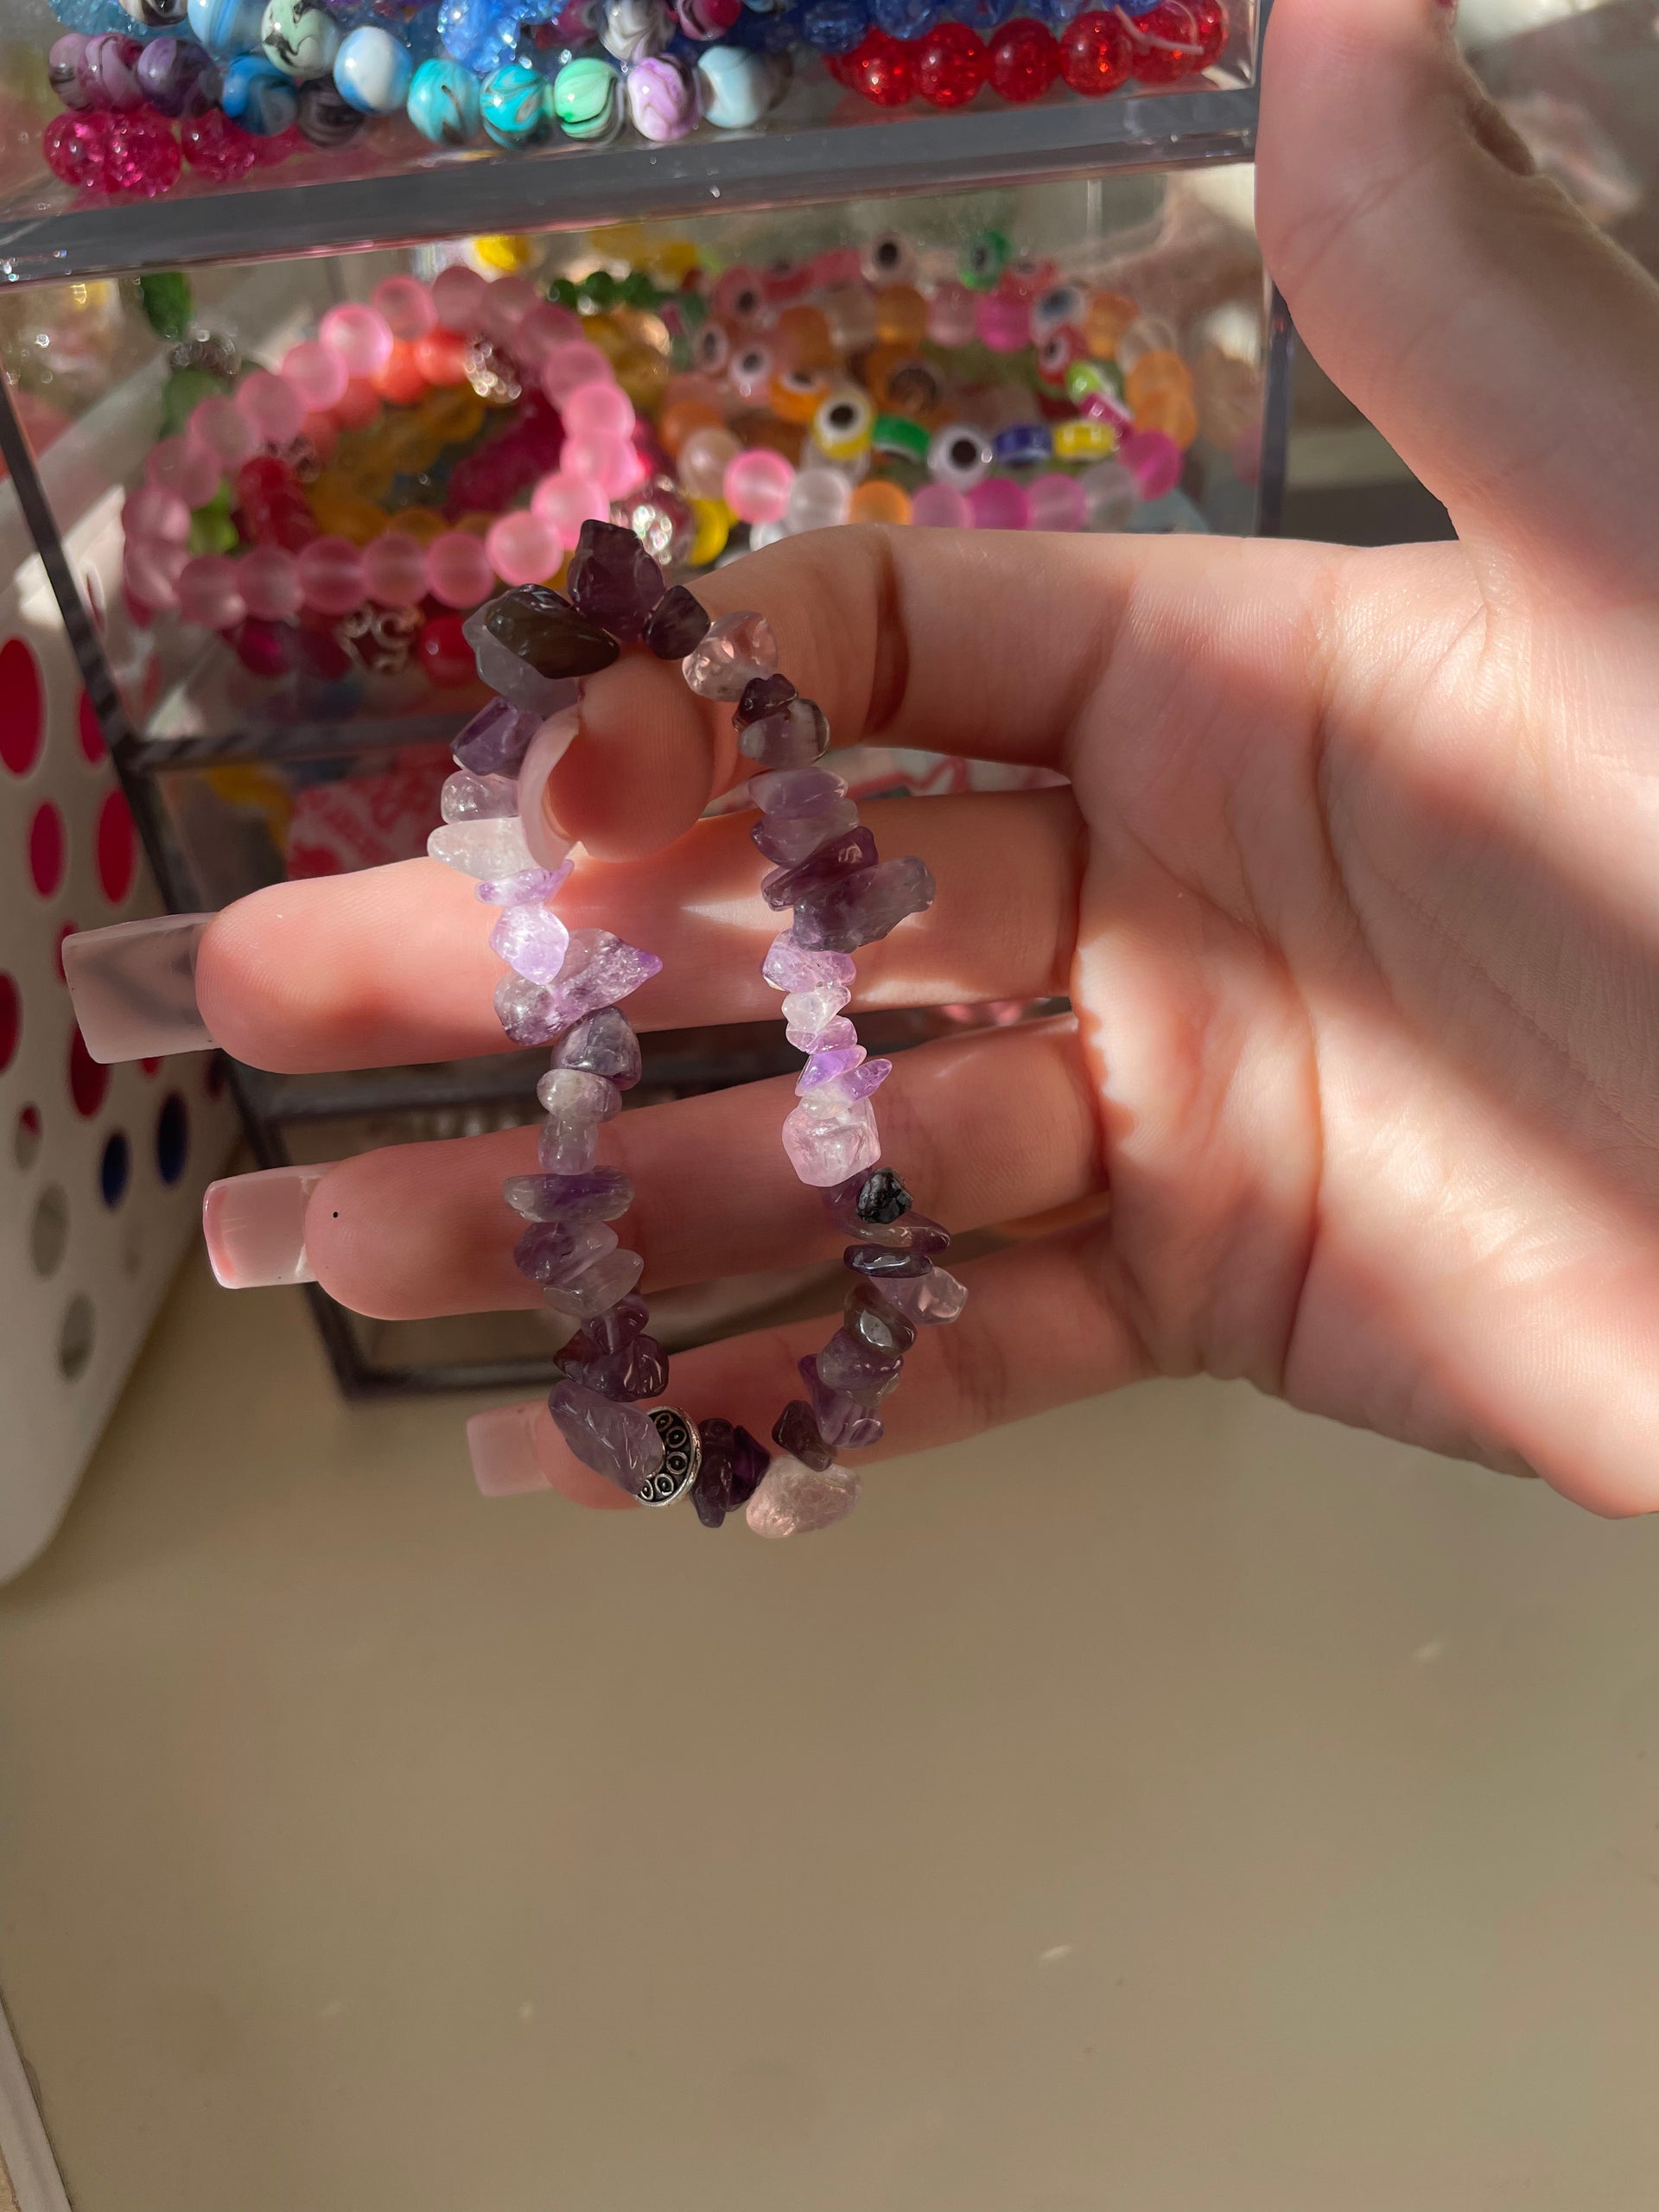 Preppy Purple Clay Bead Bracelet -  Canada